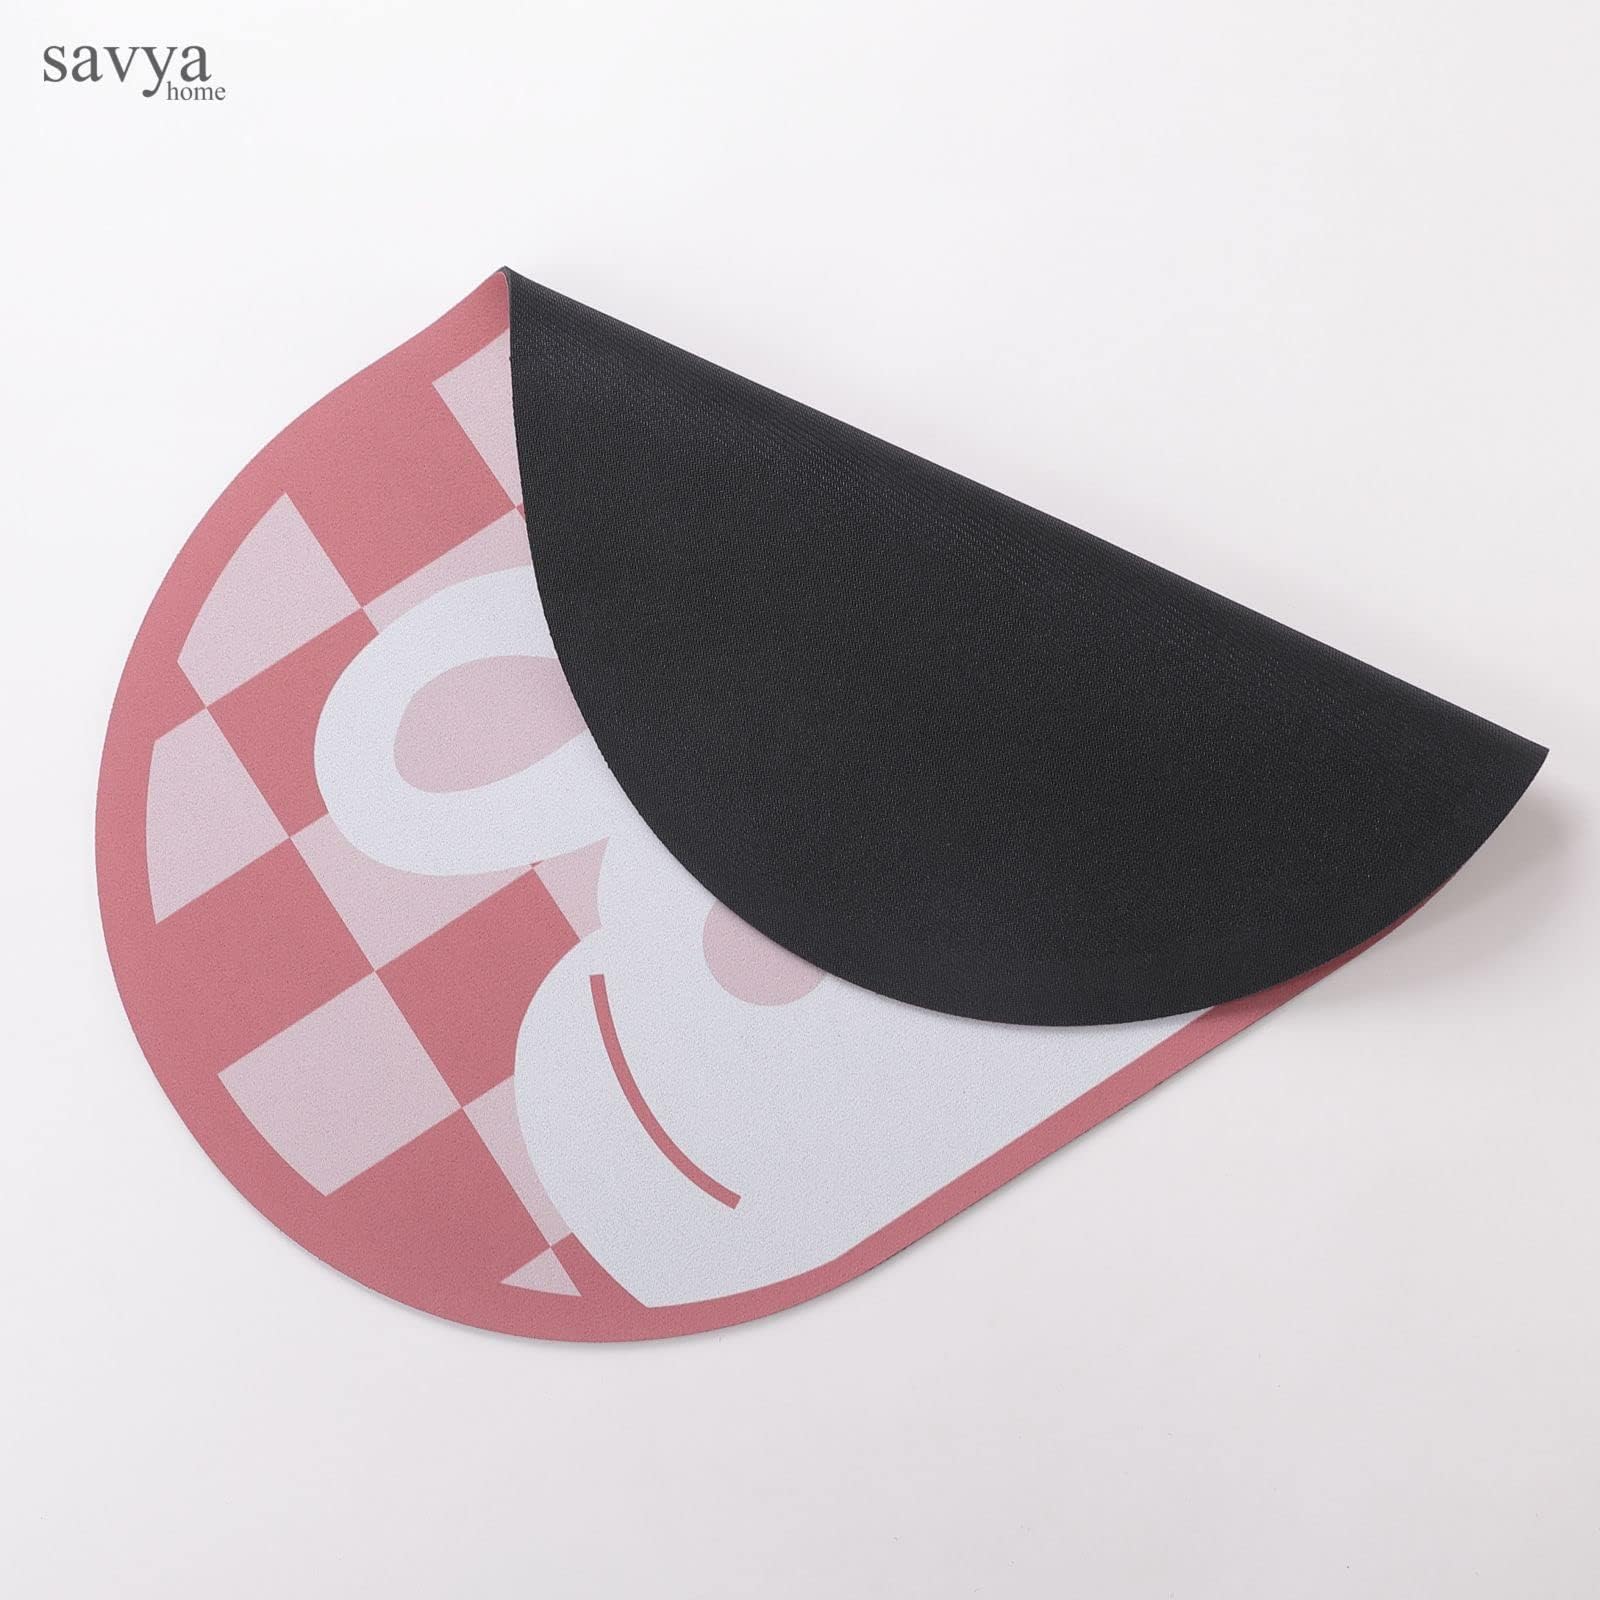 SAVYA HOME Pack of 2 Multipurpose Mat for Kids Bedroom, Play Area, Living Room, Bathroom, Shower | 60 x 40 cm |Pink Bunny & Cartoon Design